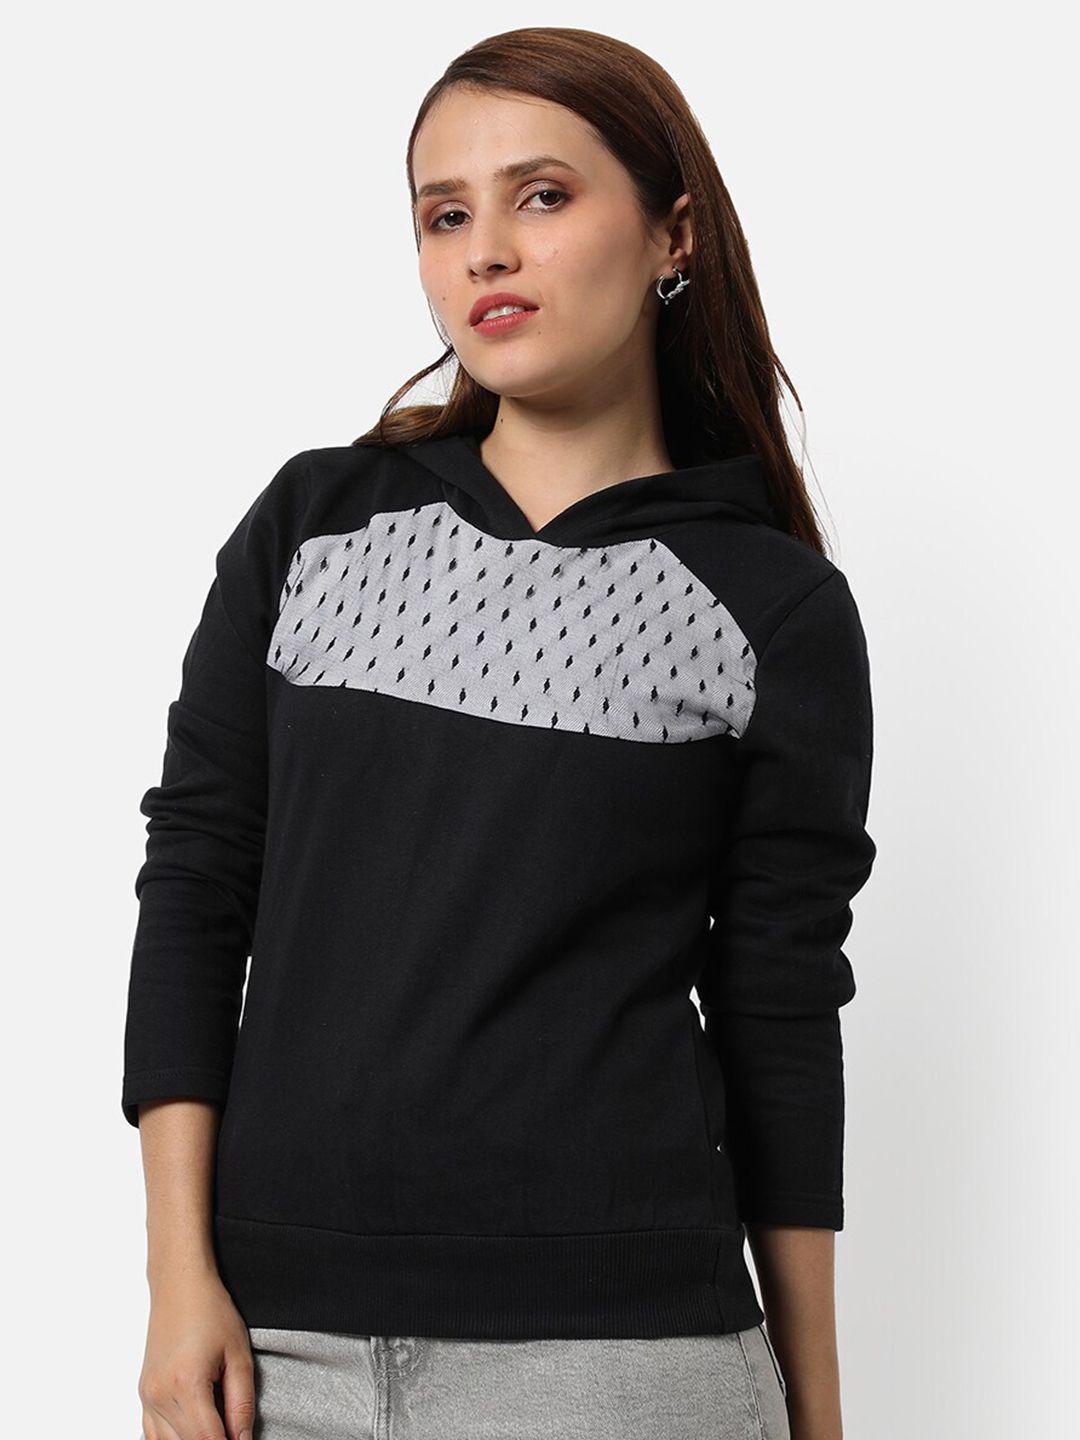 campus-sutra-women-black-colourblocked-hooded-sweatshirt